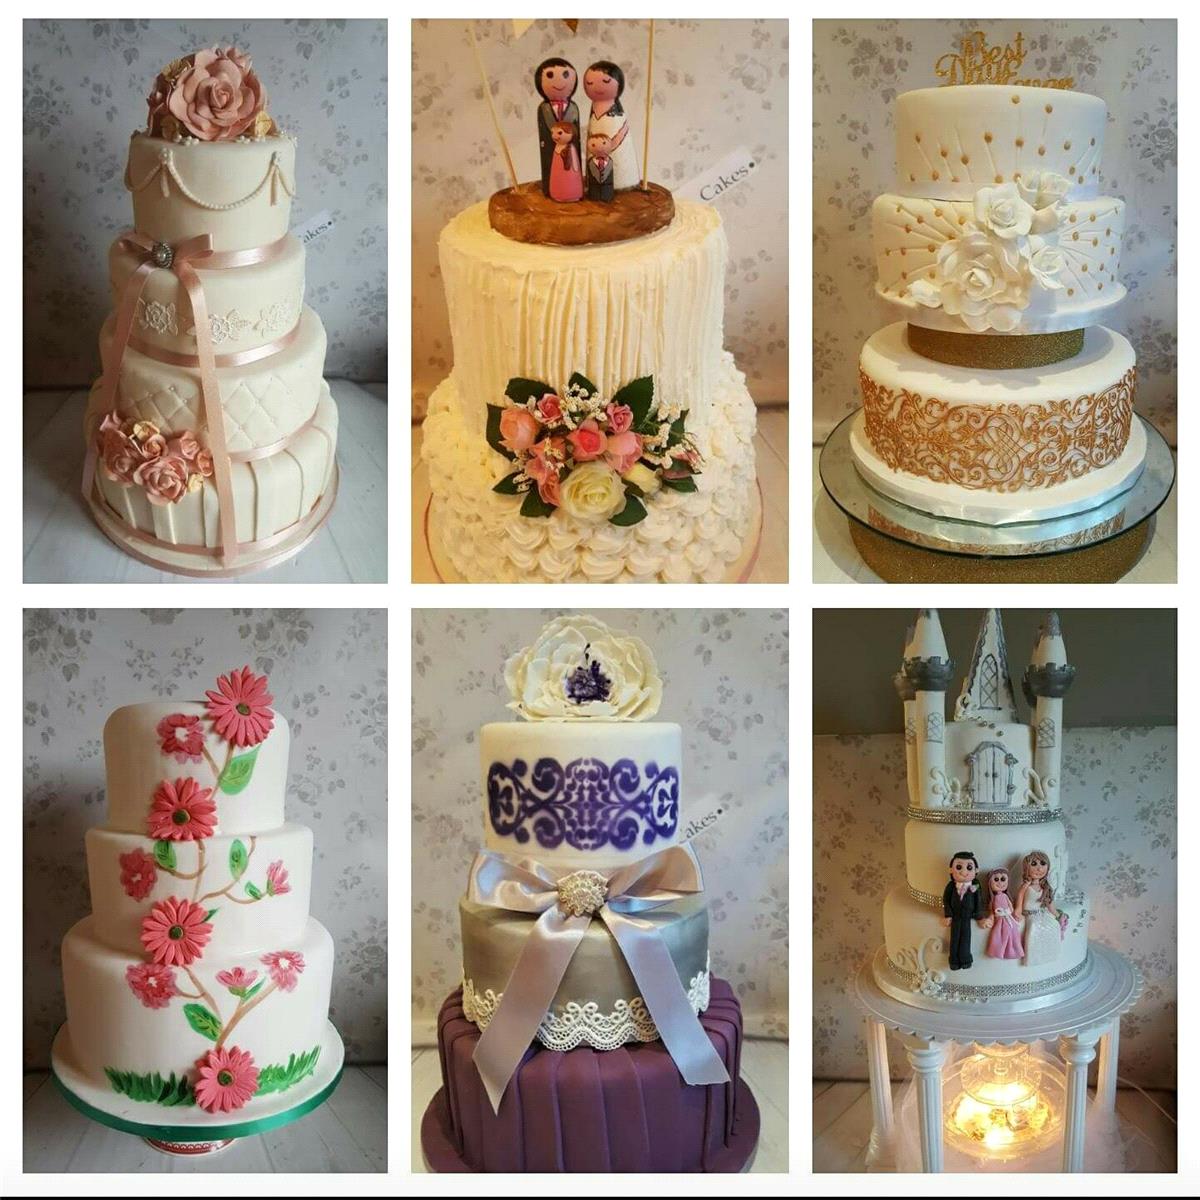 Lisa's Celebration Cakes, https://www.facebook.com/lisacelebration.cakes